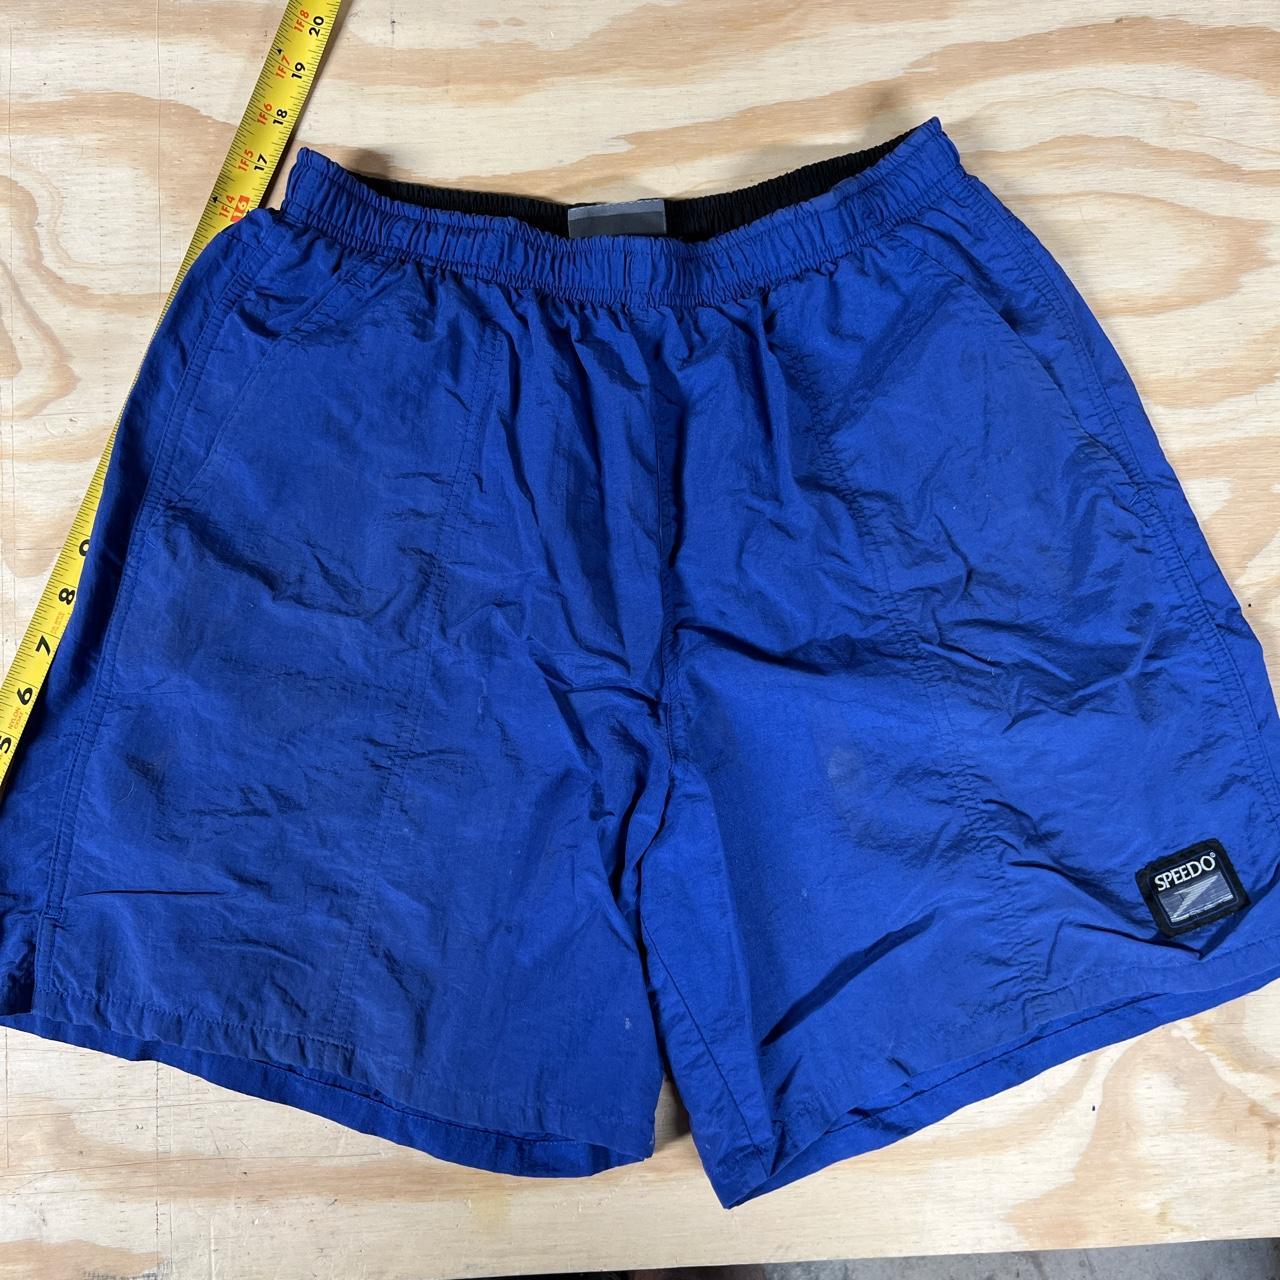 Speedo Men's Blue Shorts | Depop